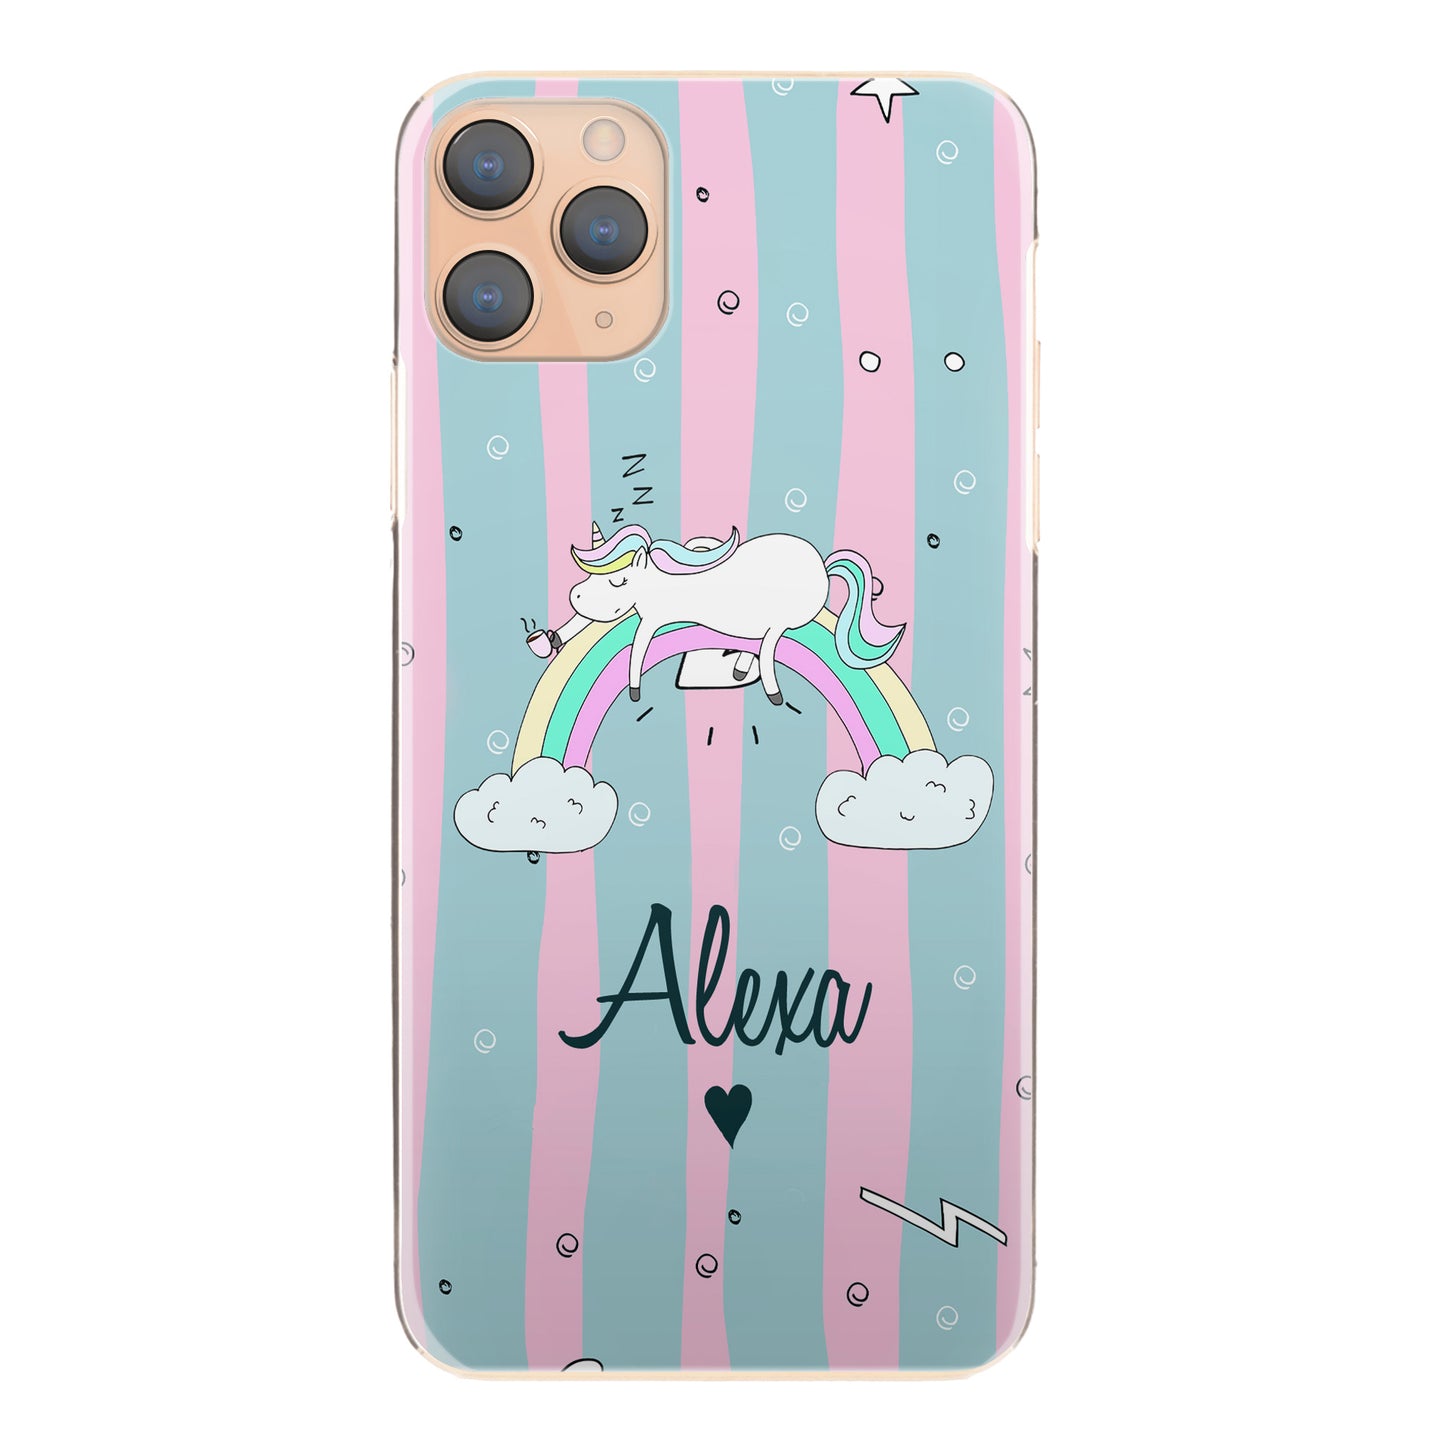 Personalised Xiaomi Phone Hard Case with Sleeping Unicorn and Rainbow on Cartoon Stripes